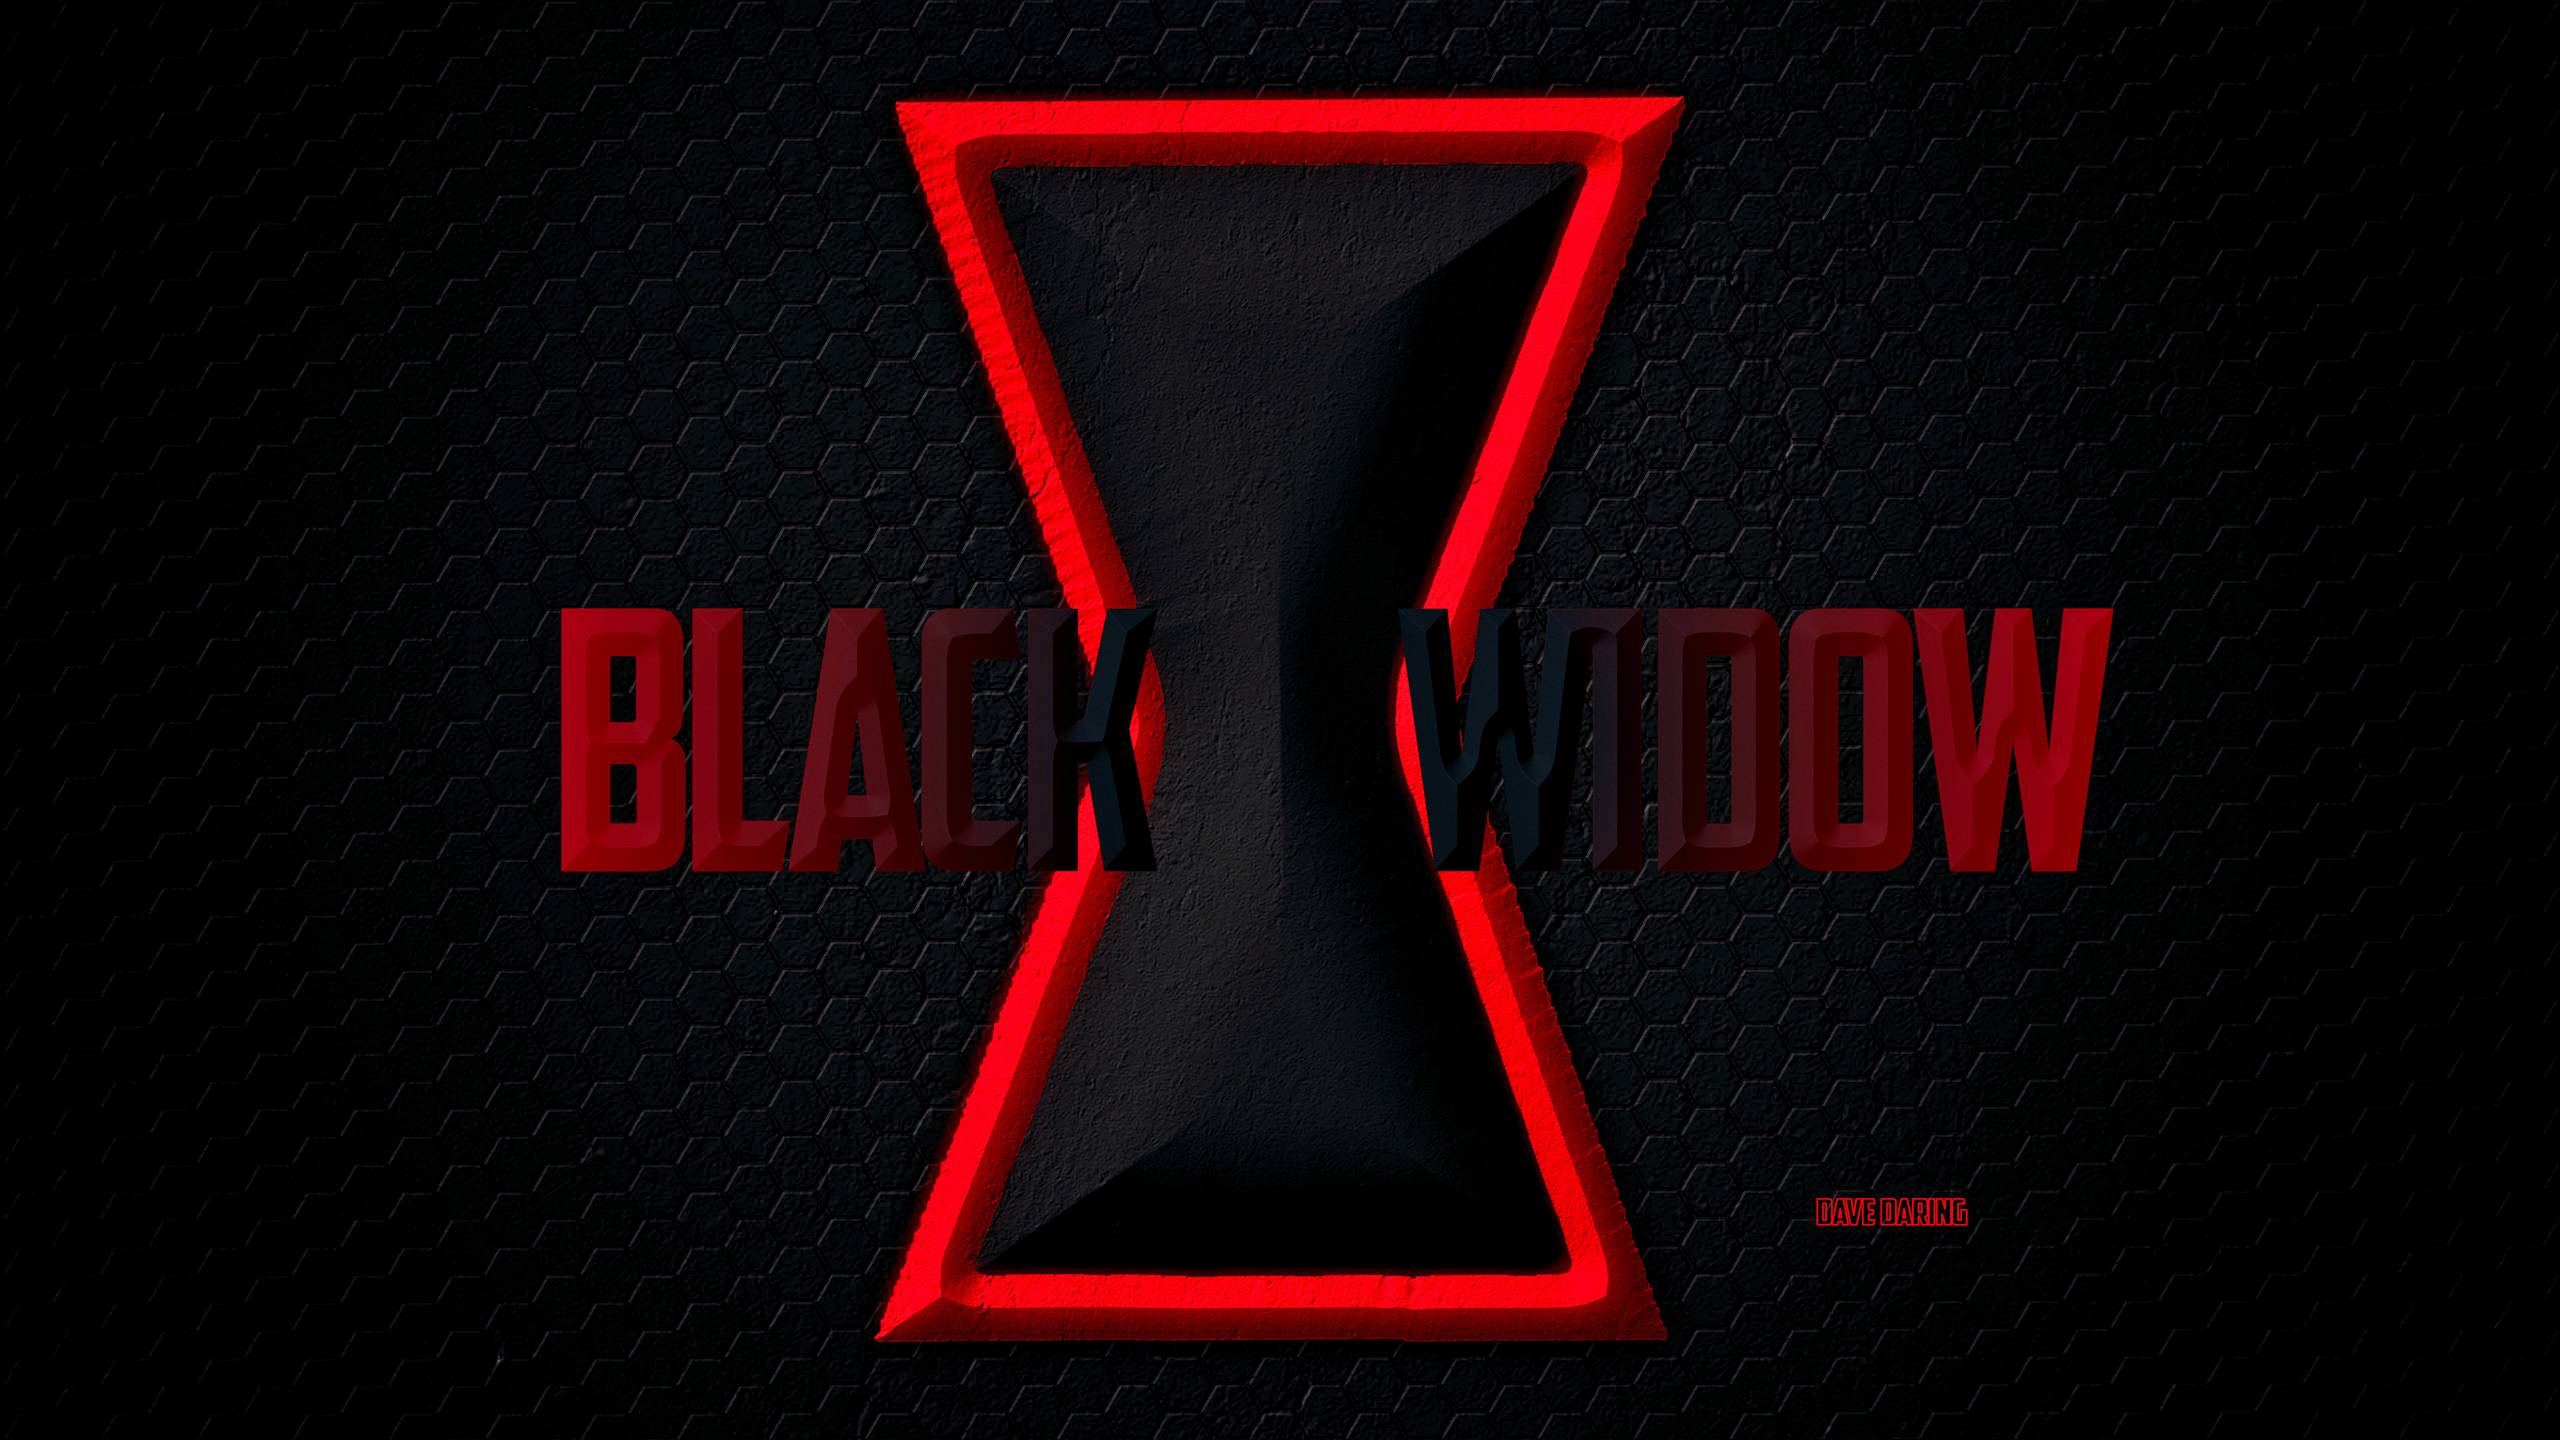 BlackWidow logo by Dave-Daring on DeviantArt